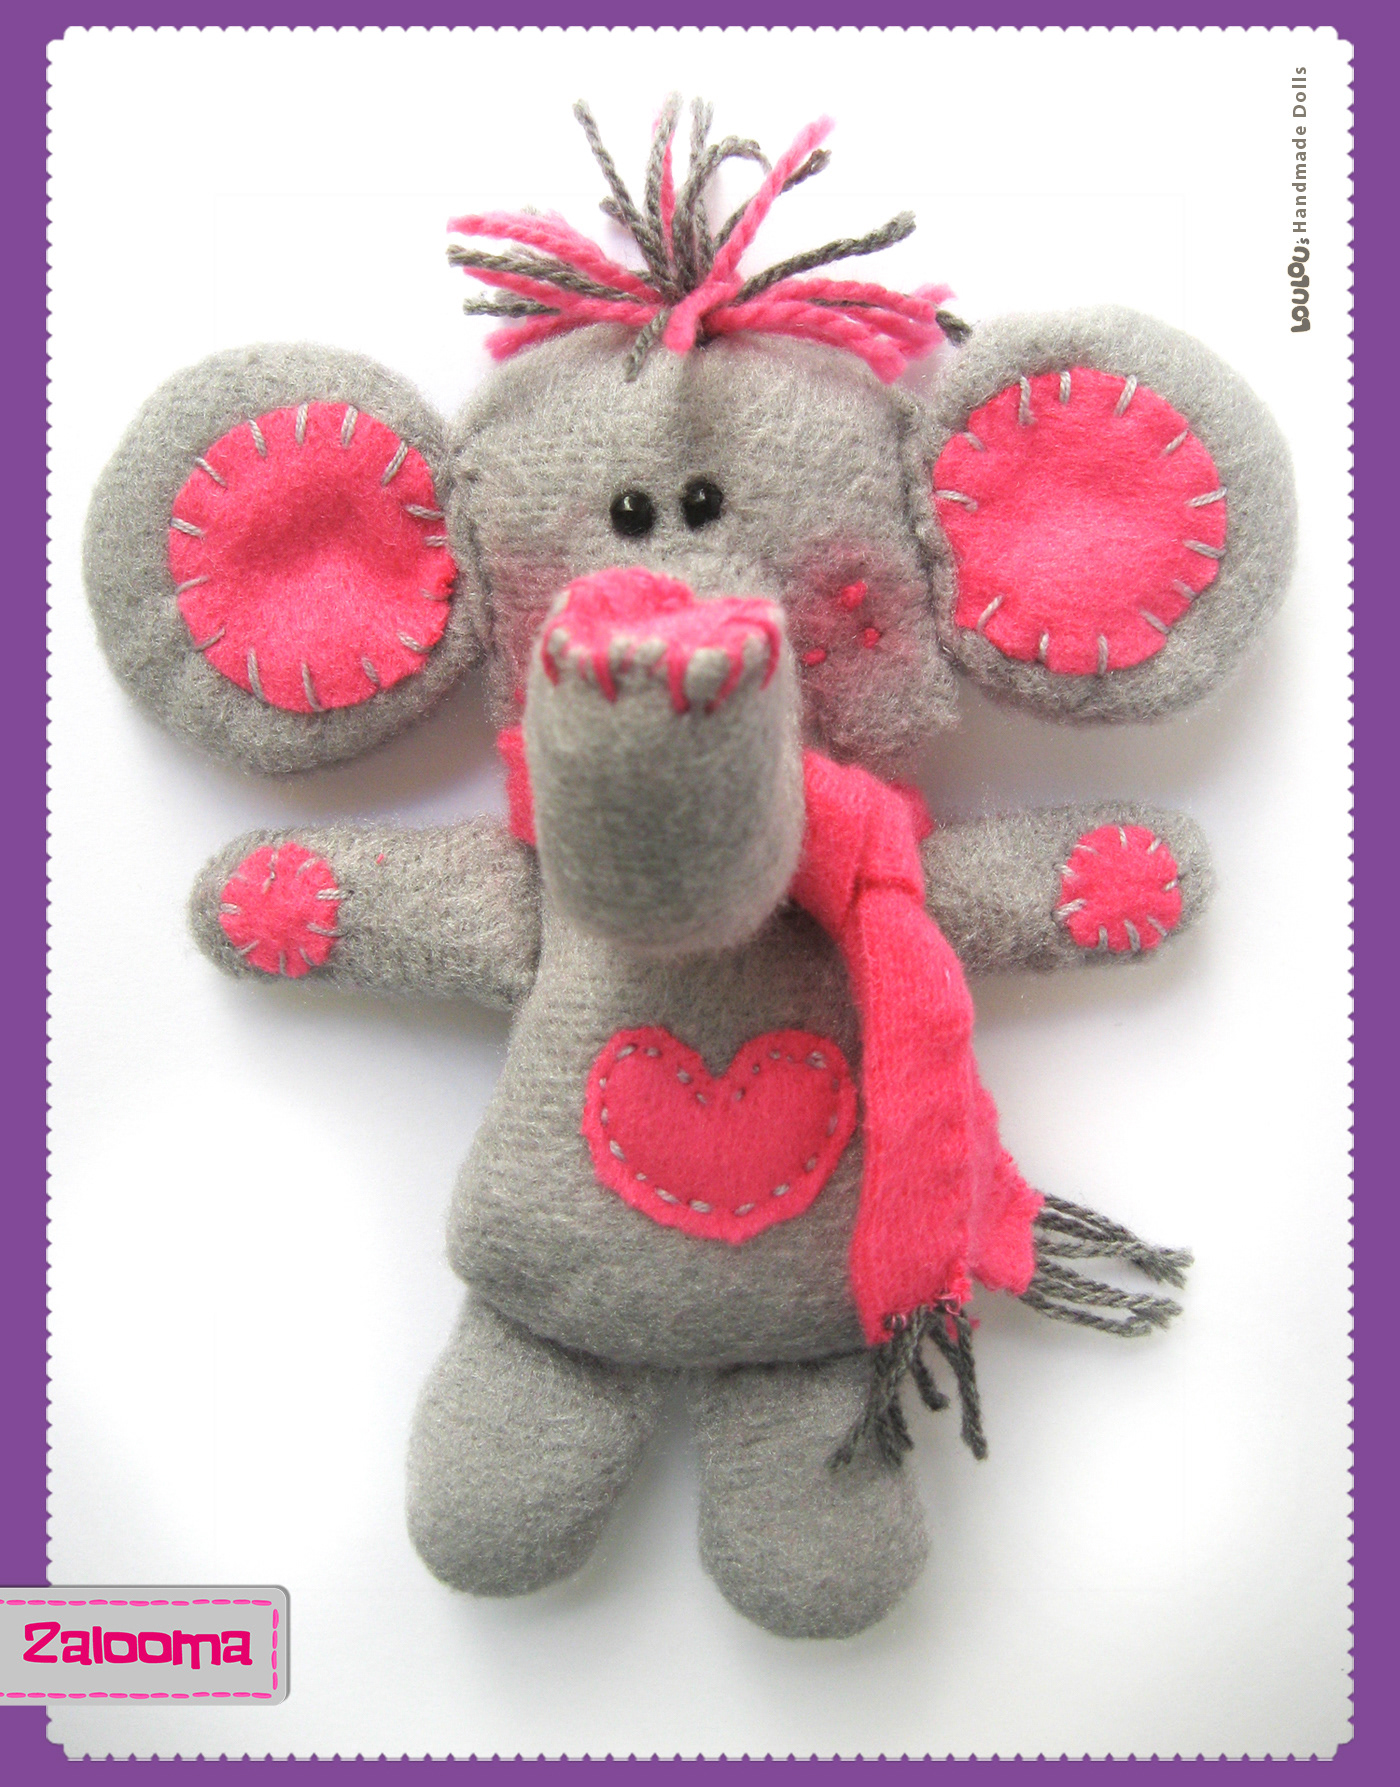 handmade elephant cute animal stuffed animals toys kids children Fun